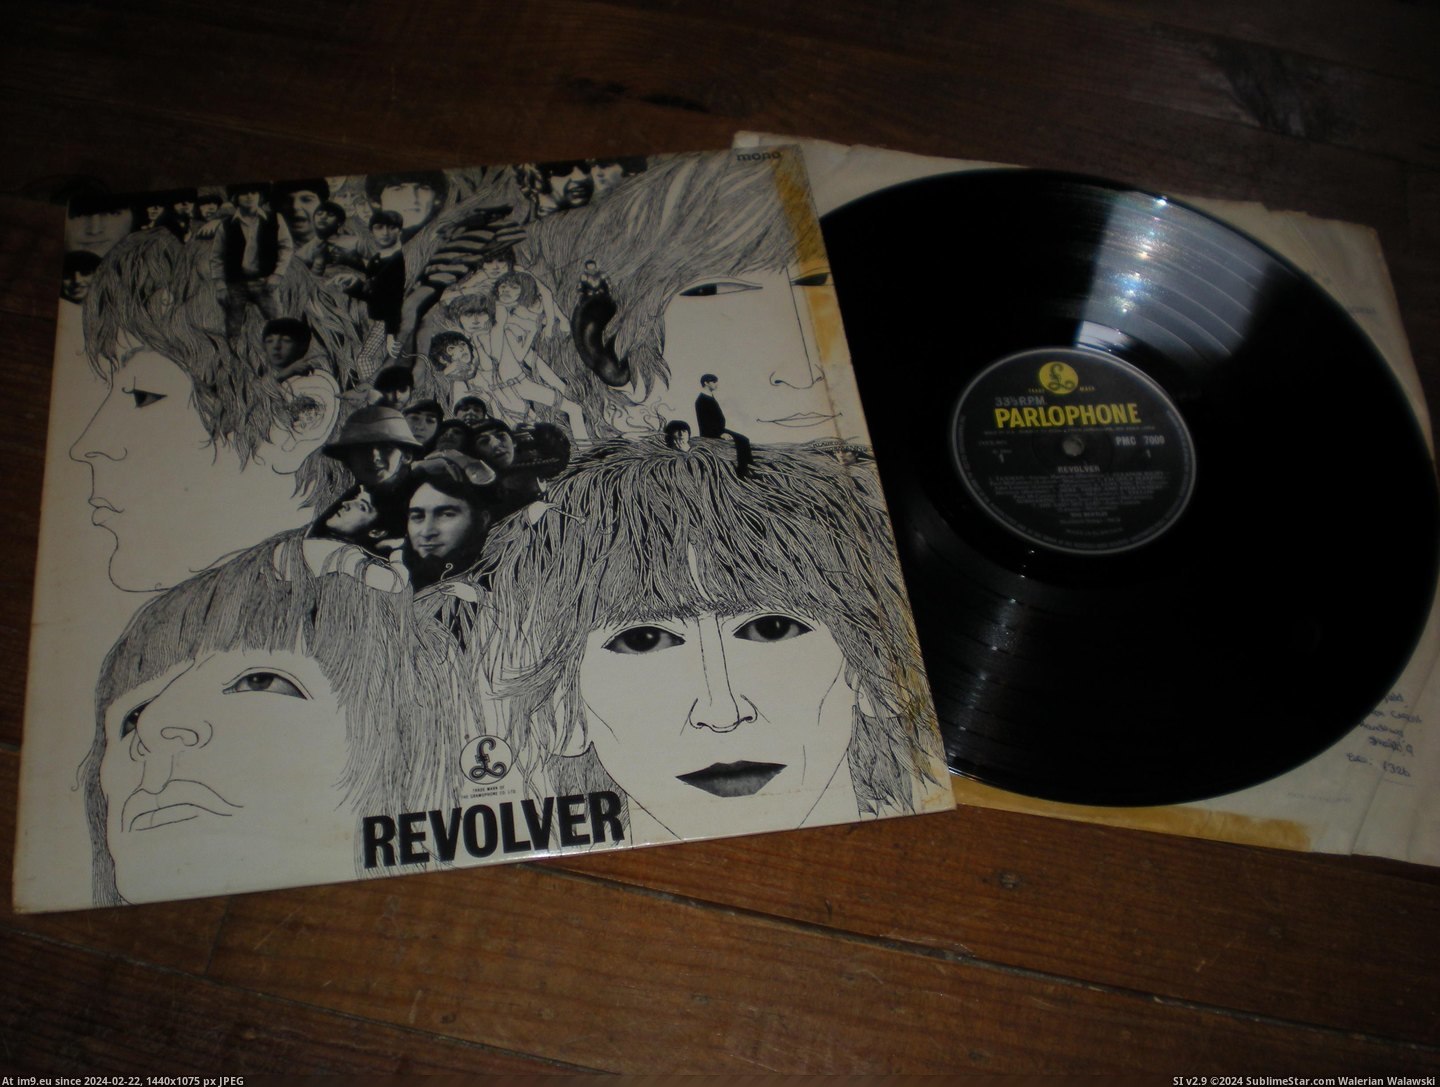  #Revolver  Revolver-2-2 2 Pic. (Изображение из альбом new 1))